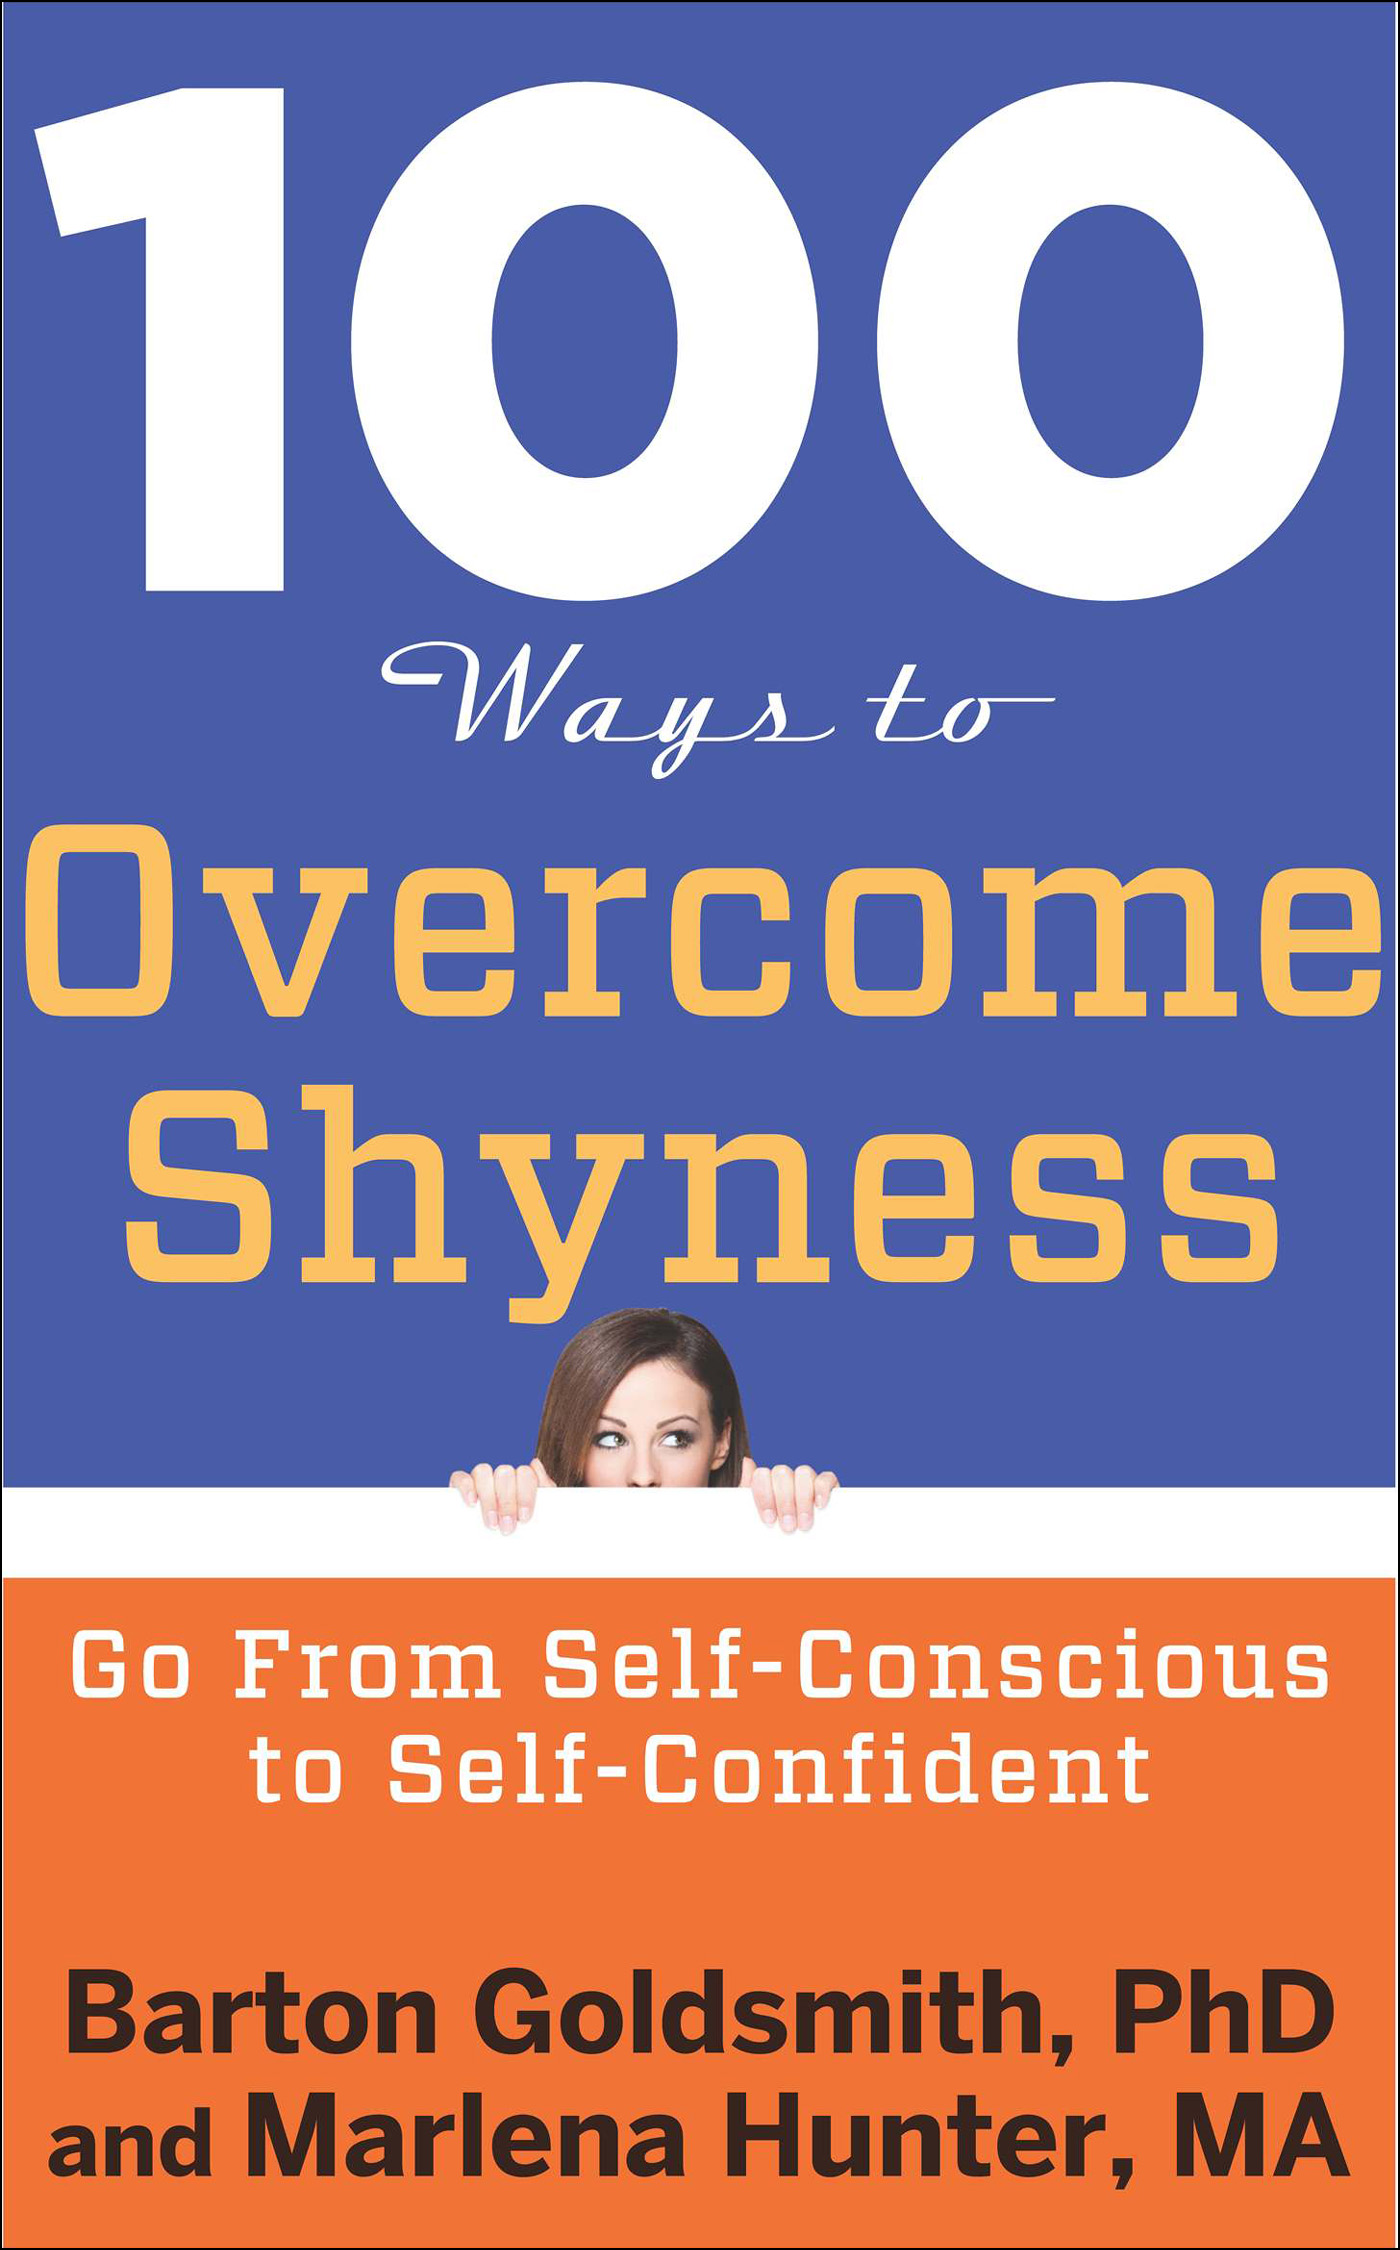 Barton Goldsmith - 100 ways to overcome shyness